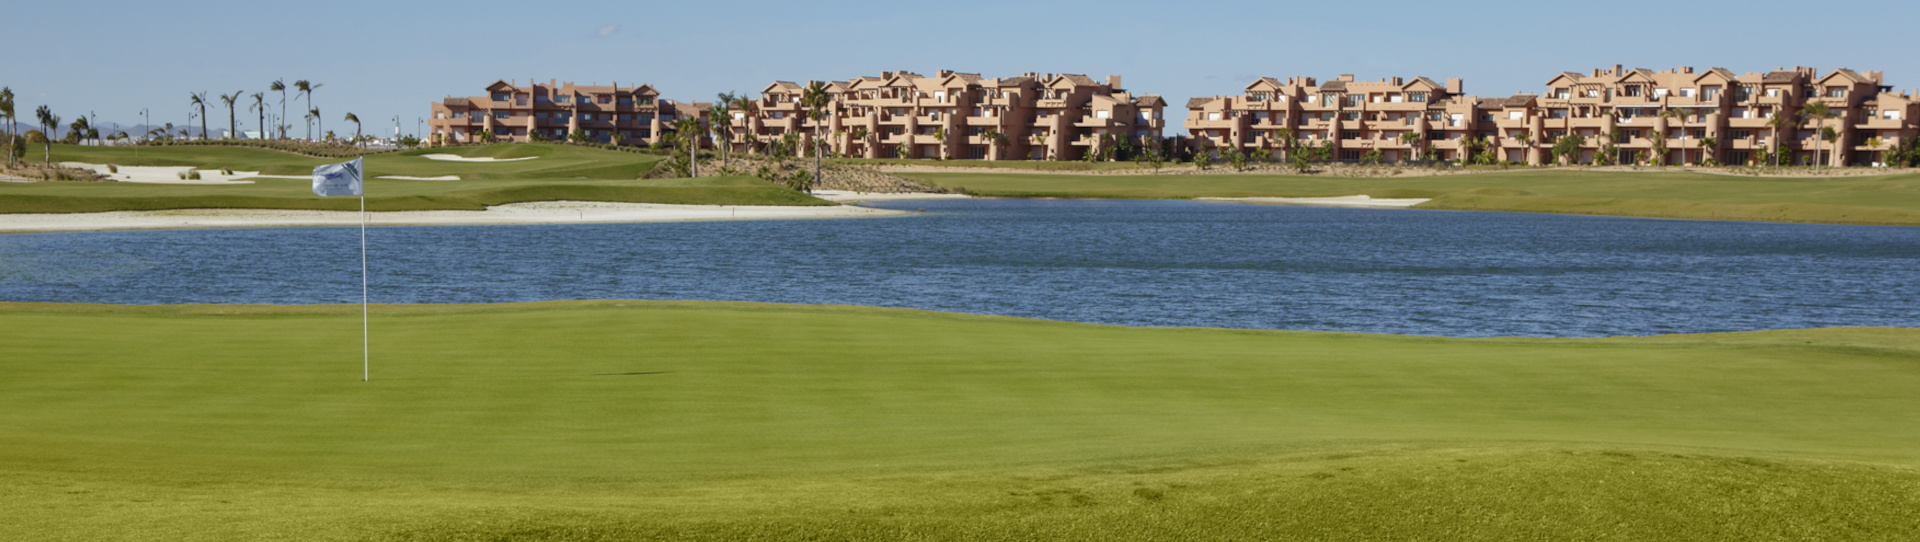 Spain golf courses - Mar Menor Golf Course - Photo 1